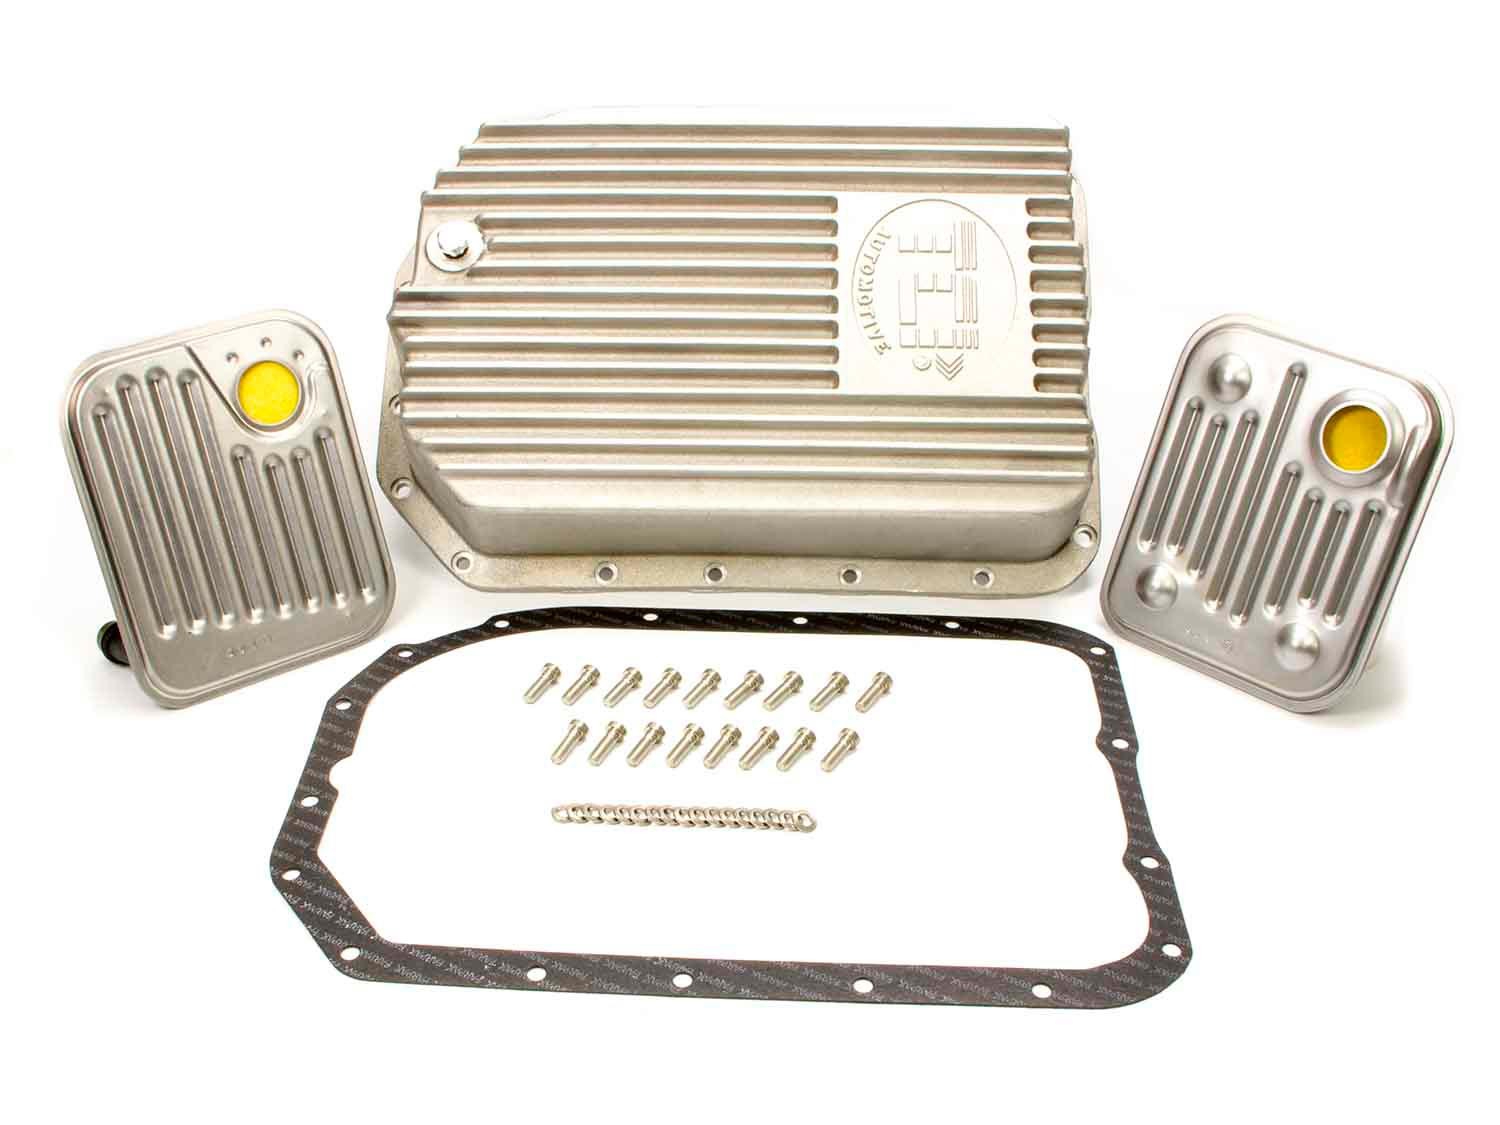 TCI 278000 Transmission Pan, Deep Sump, Adds 2.0 qt Capacity, Aluminum, Natural, GM 4L80E / 4L85E, Kit